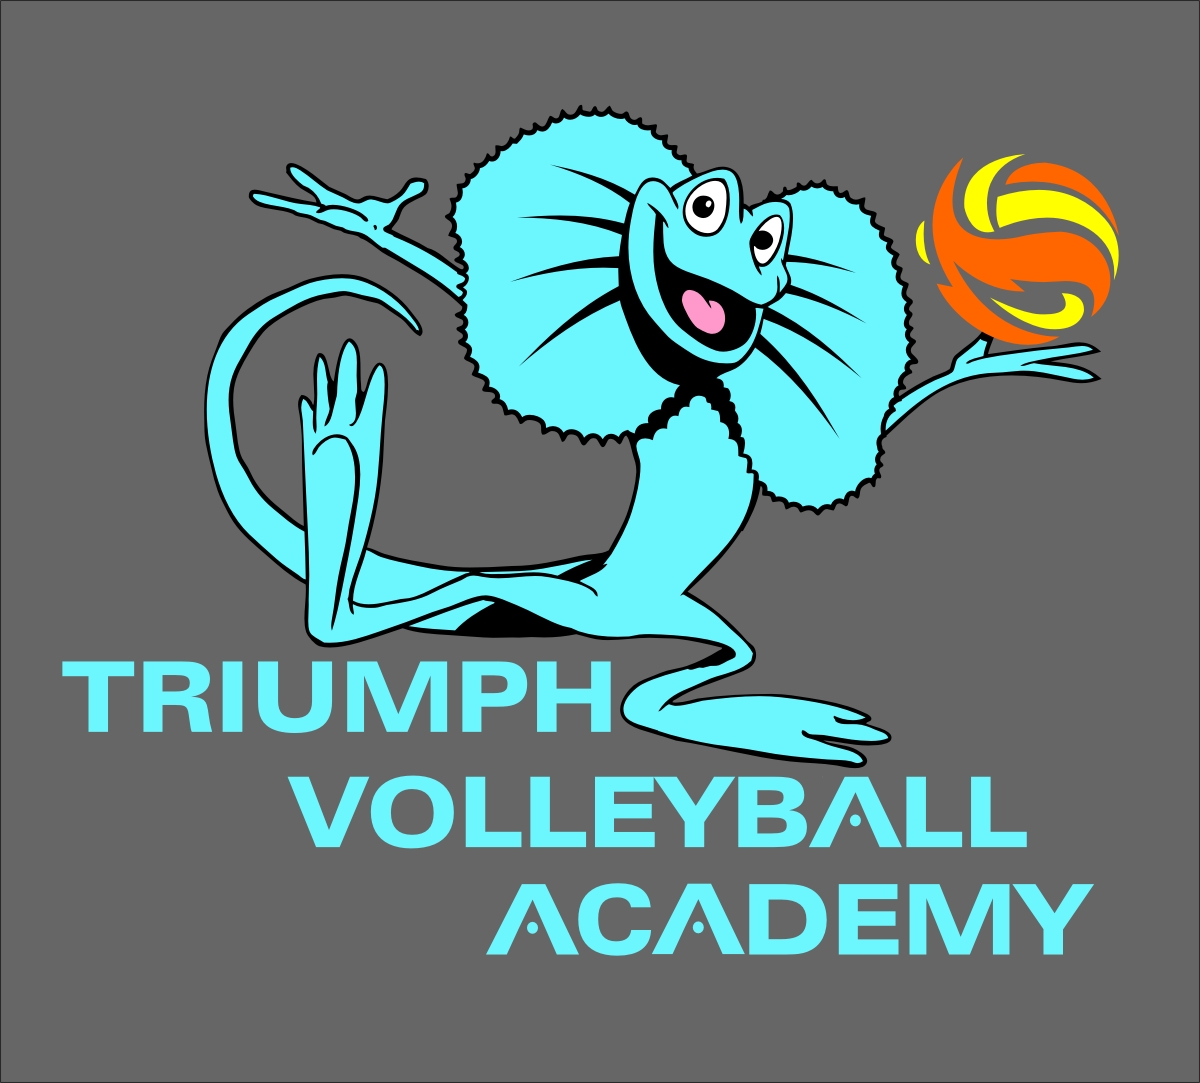 Triumph Volleyball Academy logo